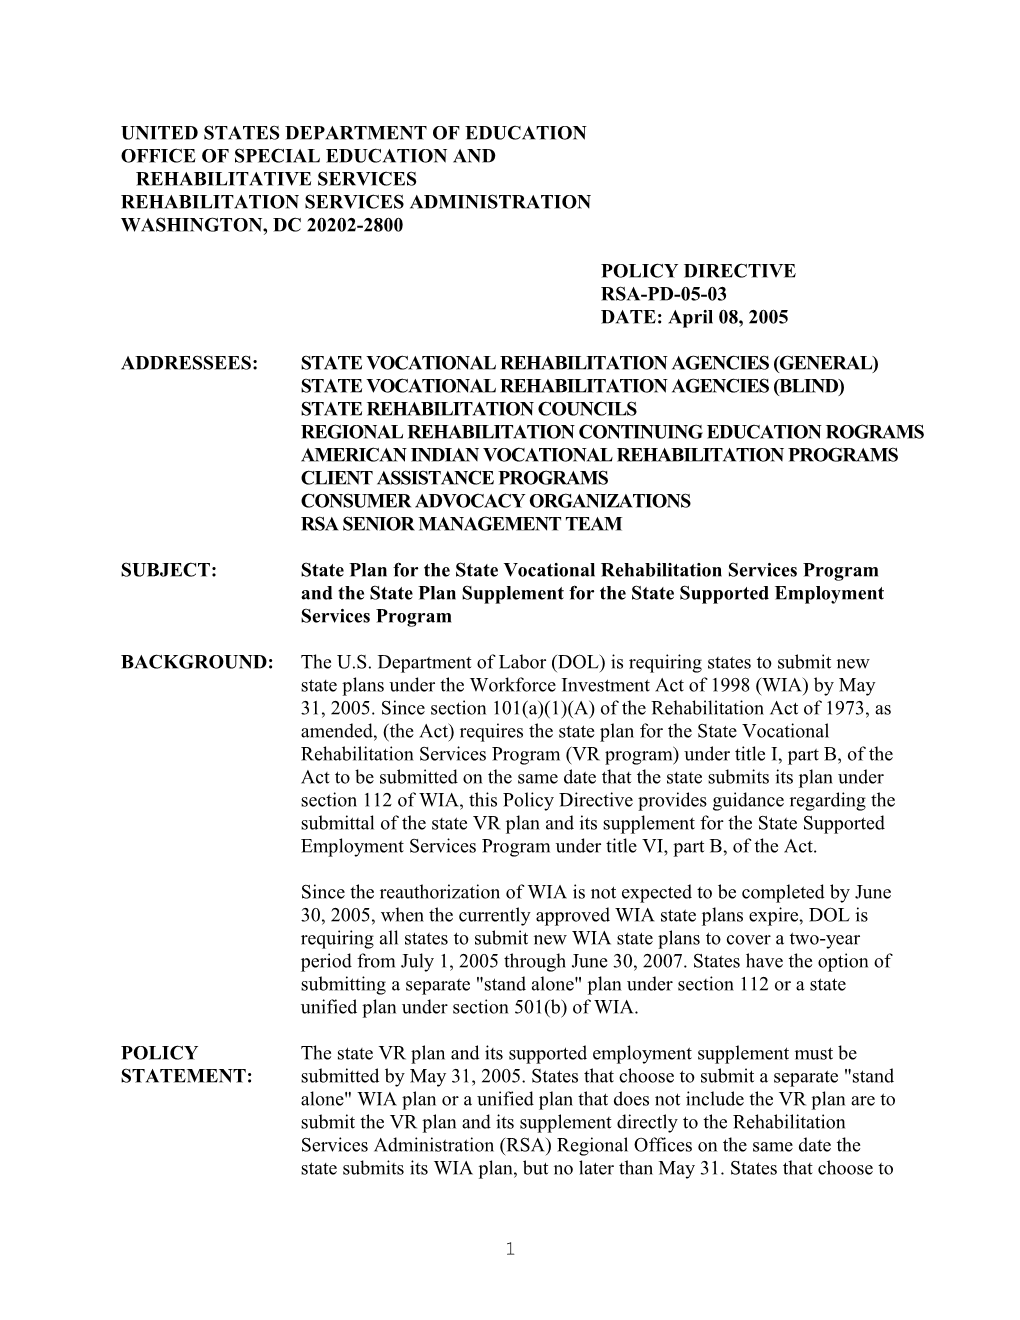 RSA-PD-05-03 RSA Policy Directive